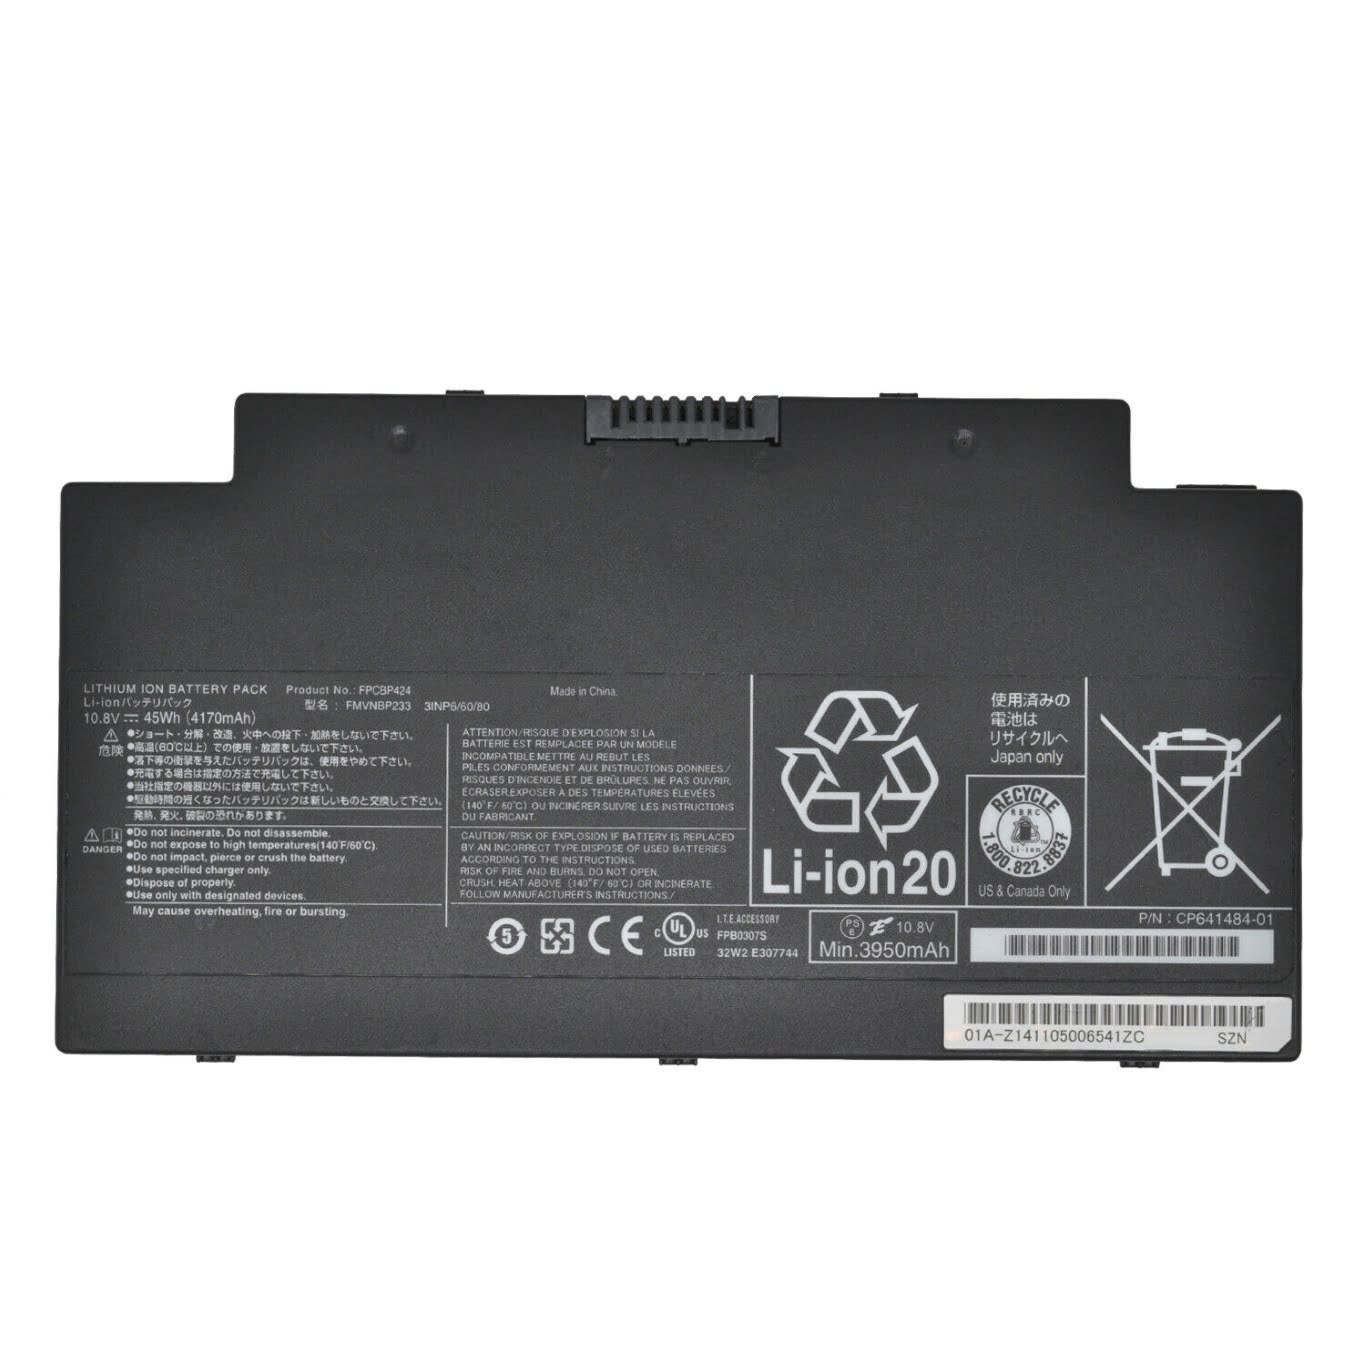 Fujitsu Fpb0307s, Fmvnbp233 Laptop Akku Fuer Lifebook Ah77/m, Lifebook Ah77/s ersatz